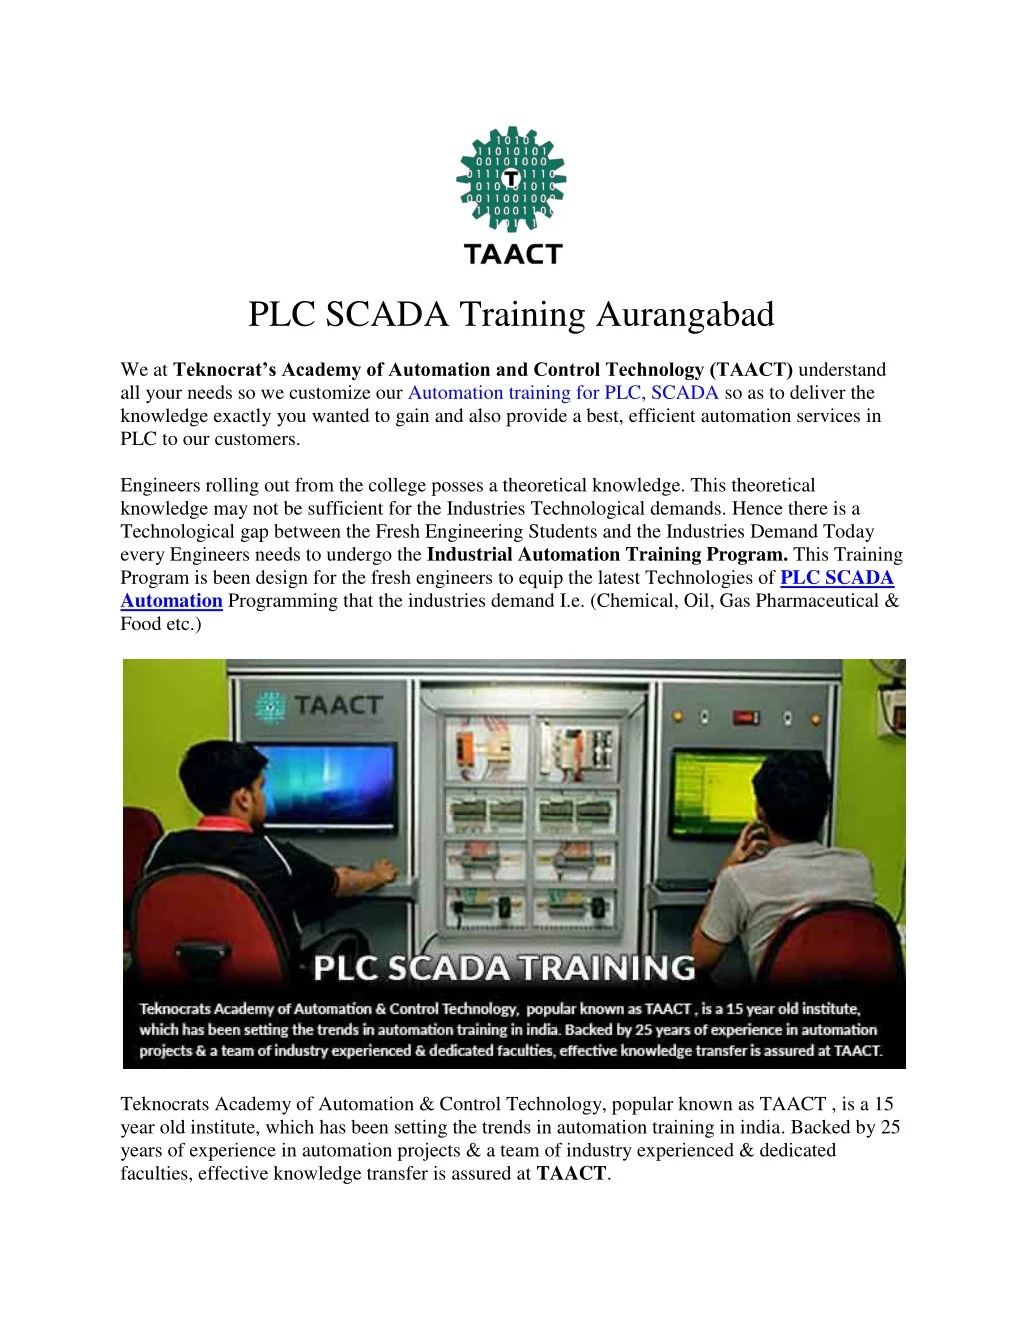 plc scada training aurangabad